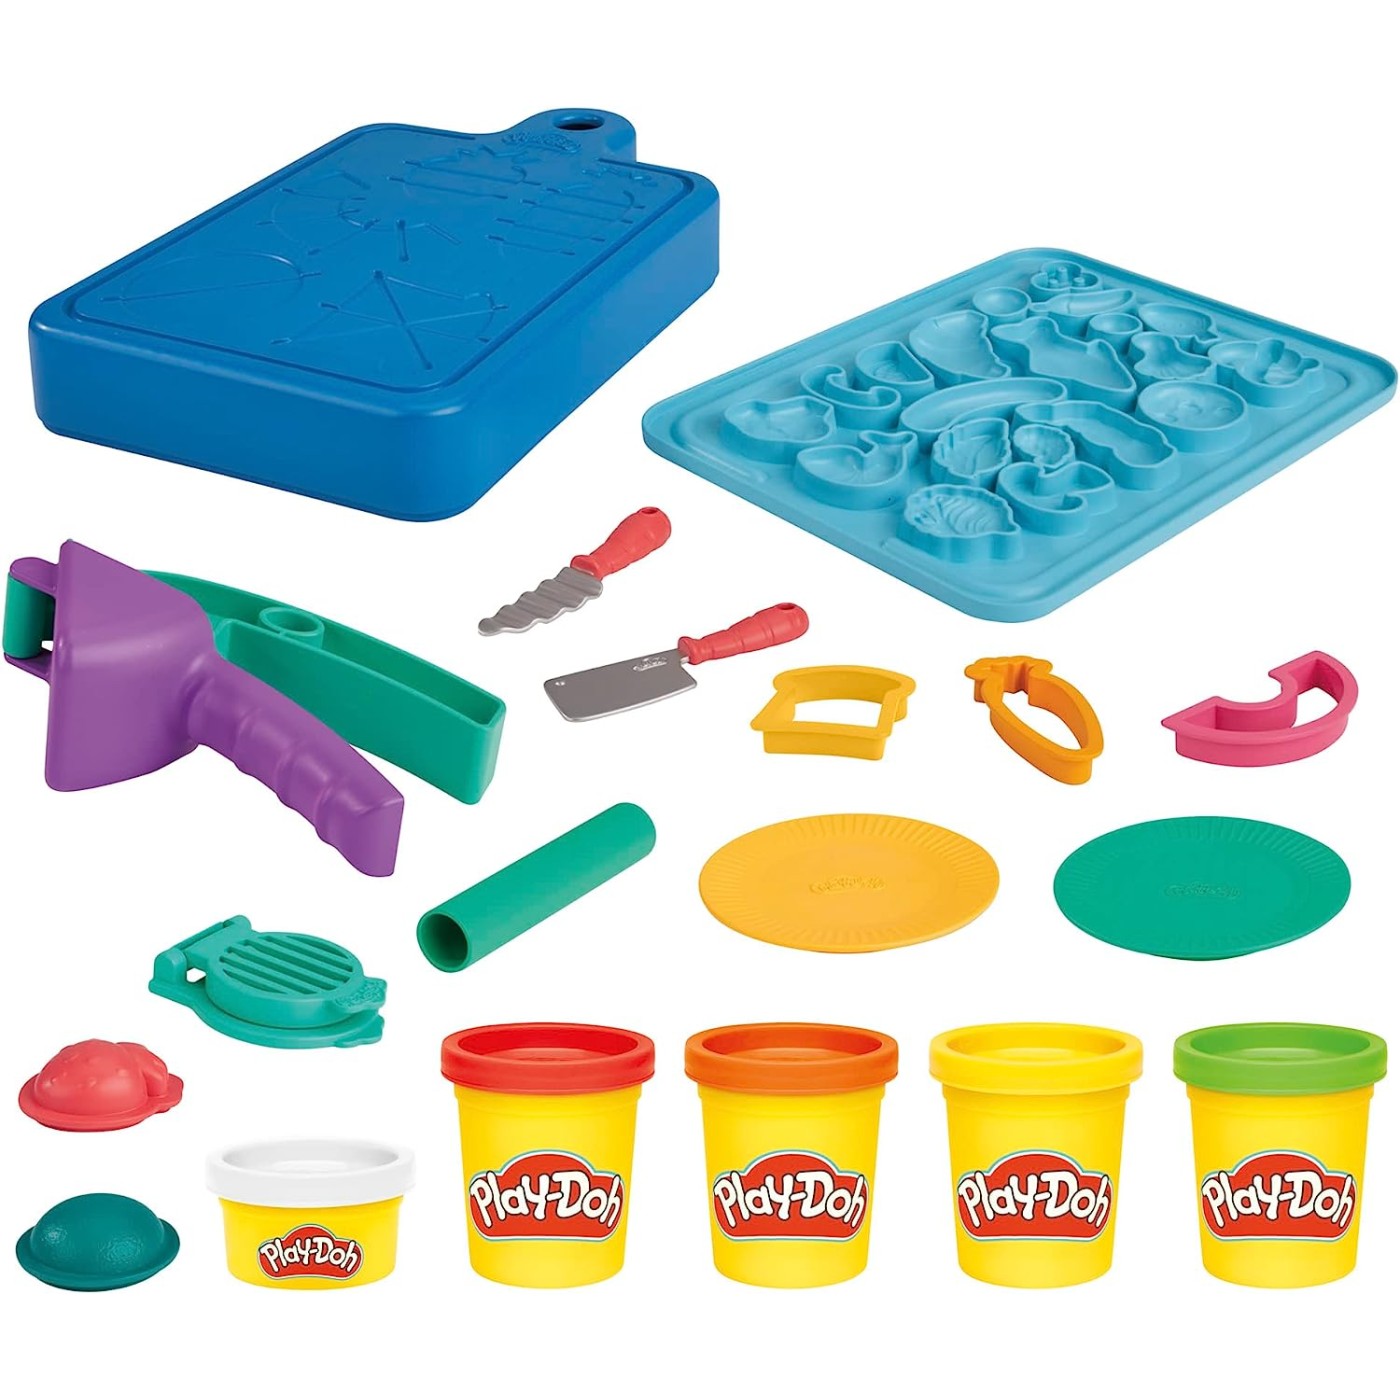 Hasbro Play-Doh Little Chef Starter Set (F6904)